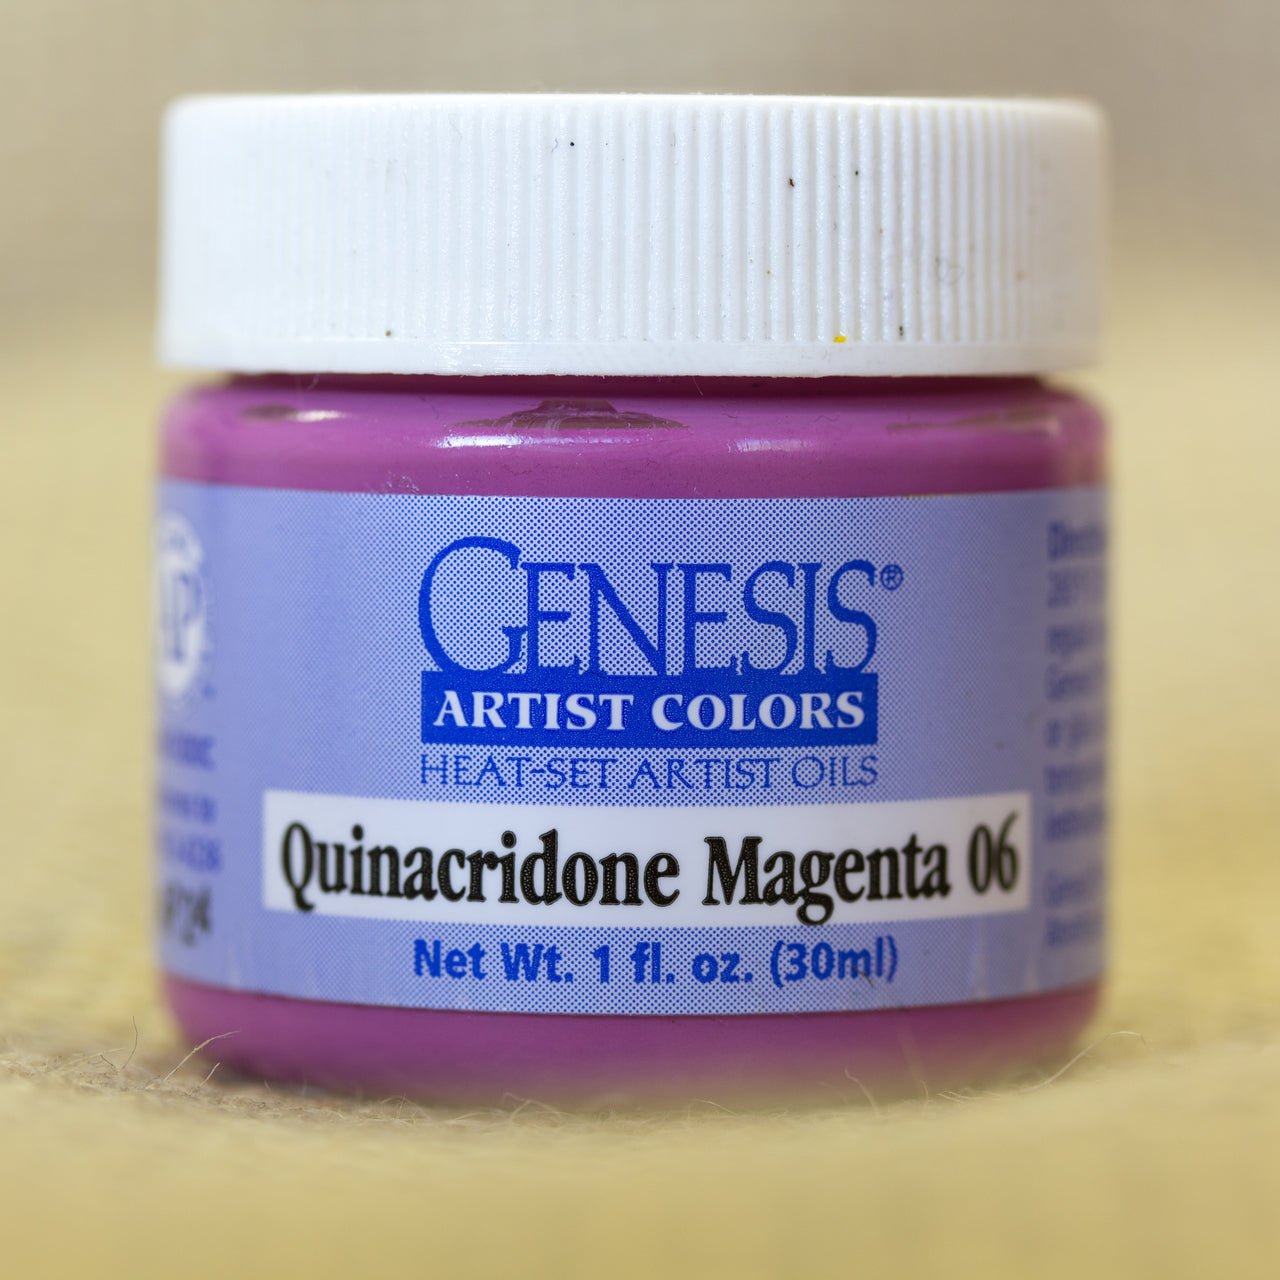 Genesis Heat Set Paint - Quinacridone Magenta 06 - 1oz - Create A Little Magic (Pty) Ltd